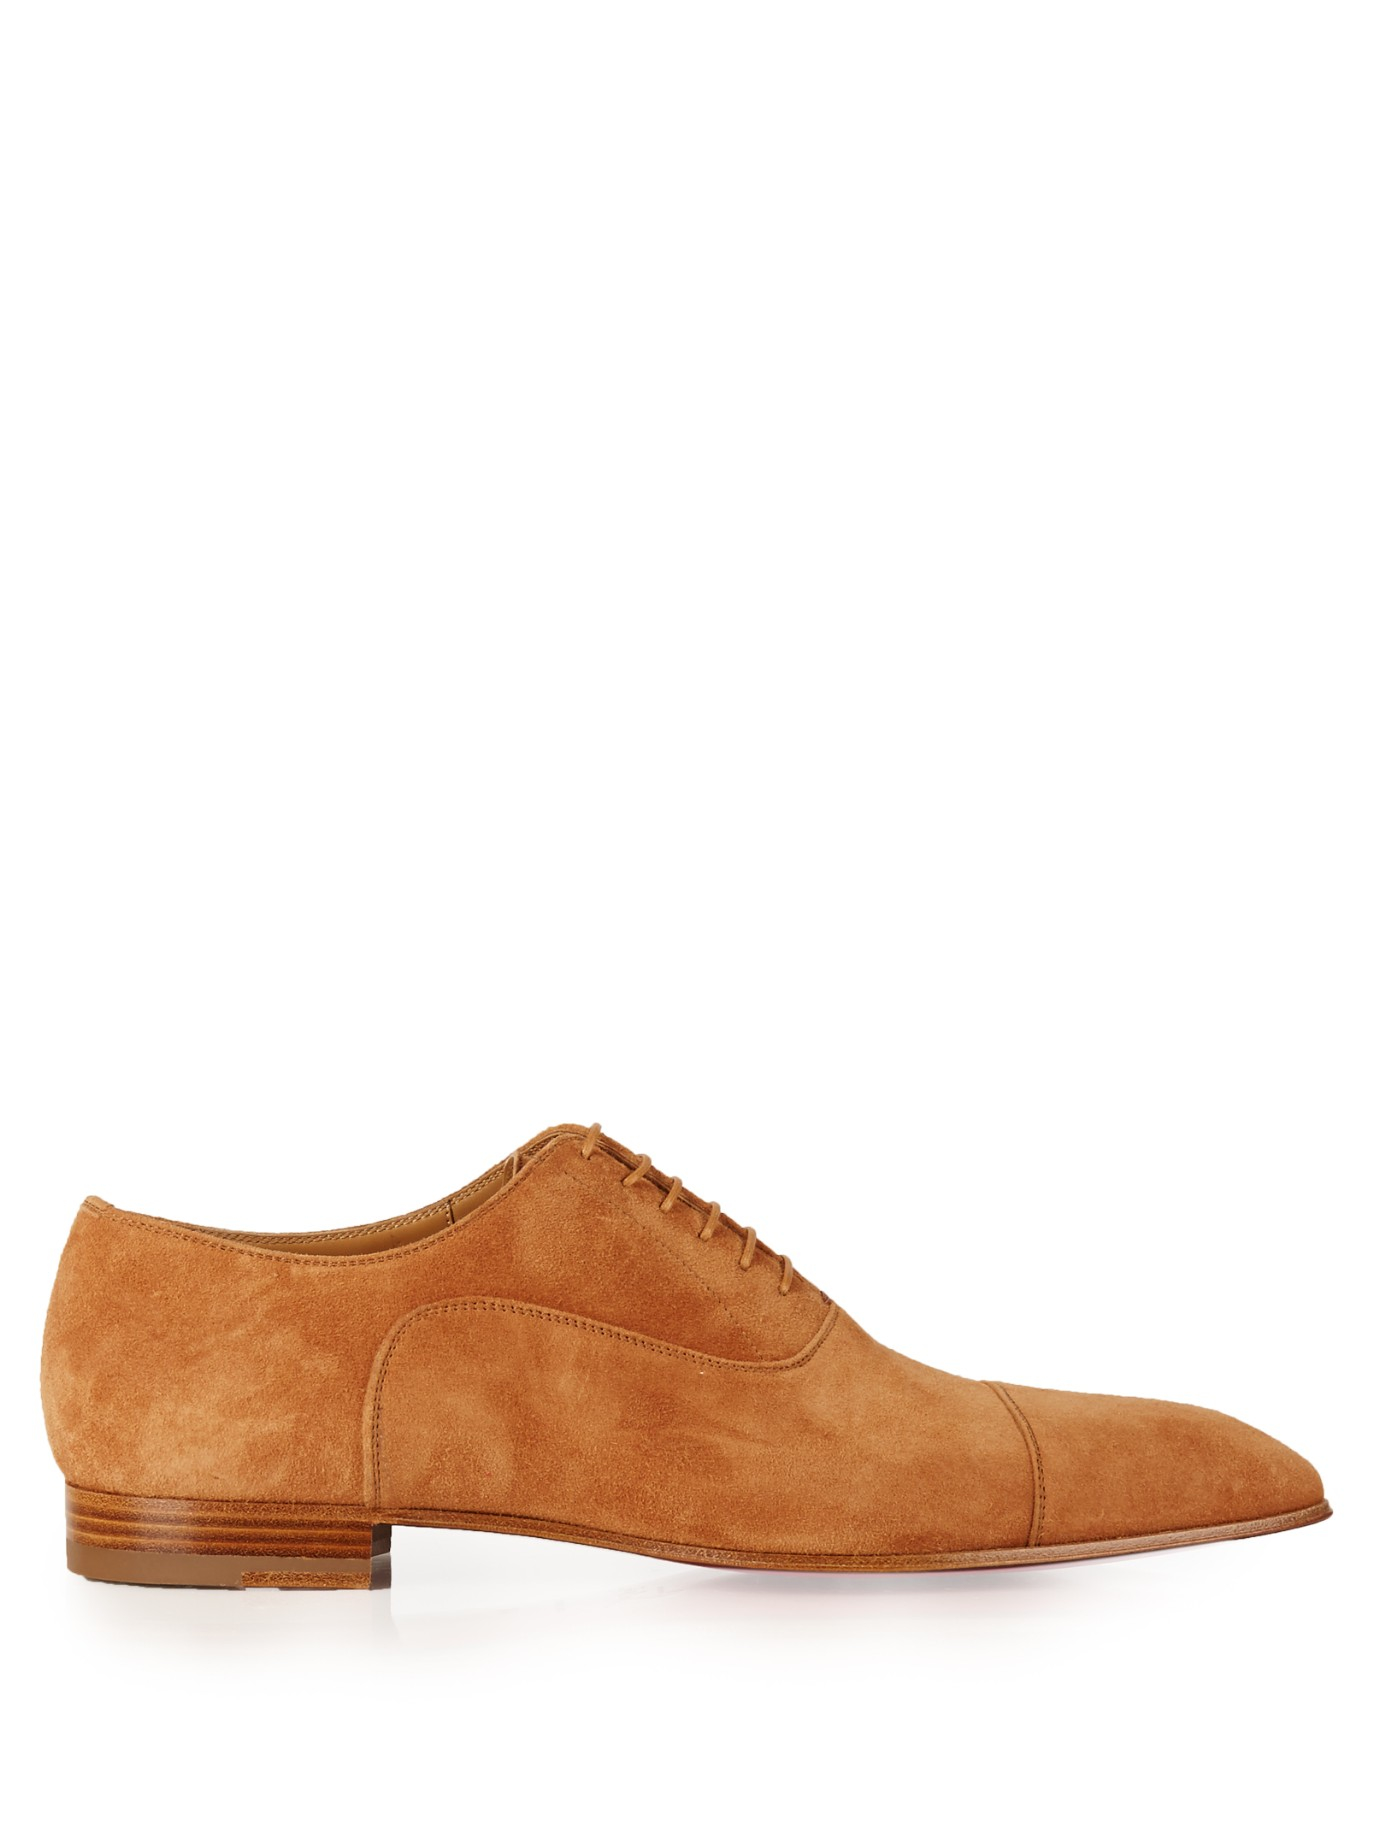 Christian Louboutin Mens Shoes Brown on Sale | website.jkuat.ac.ke